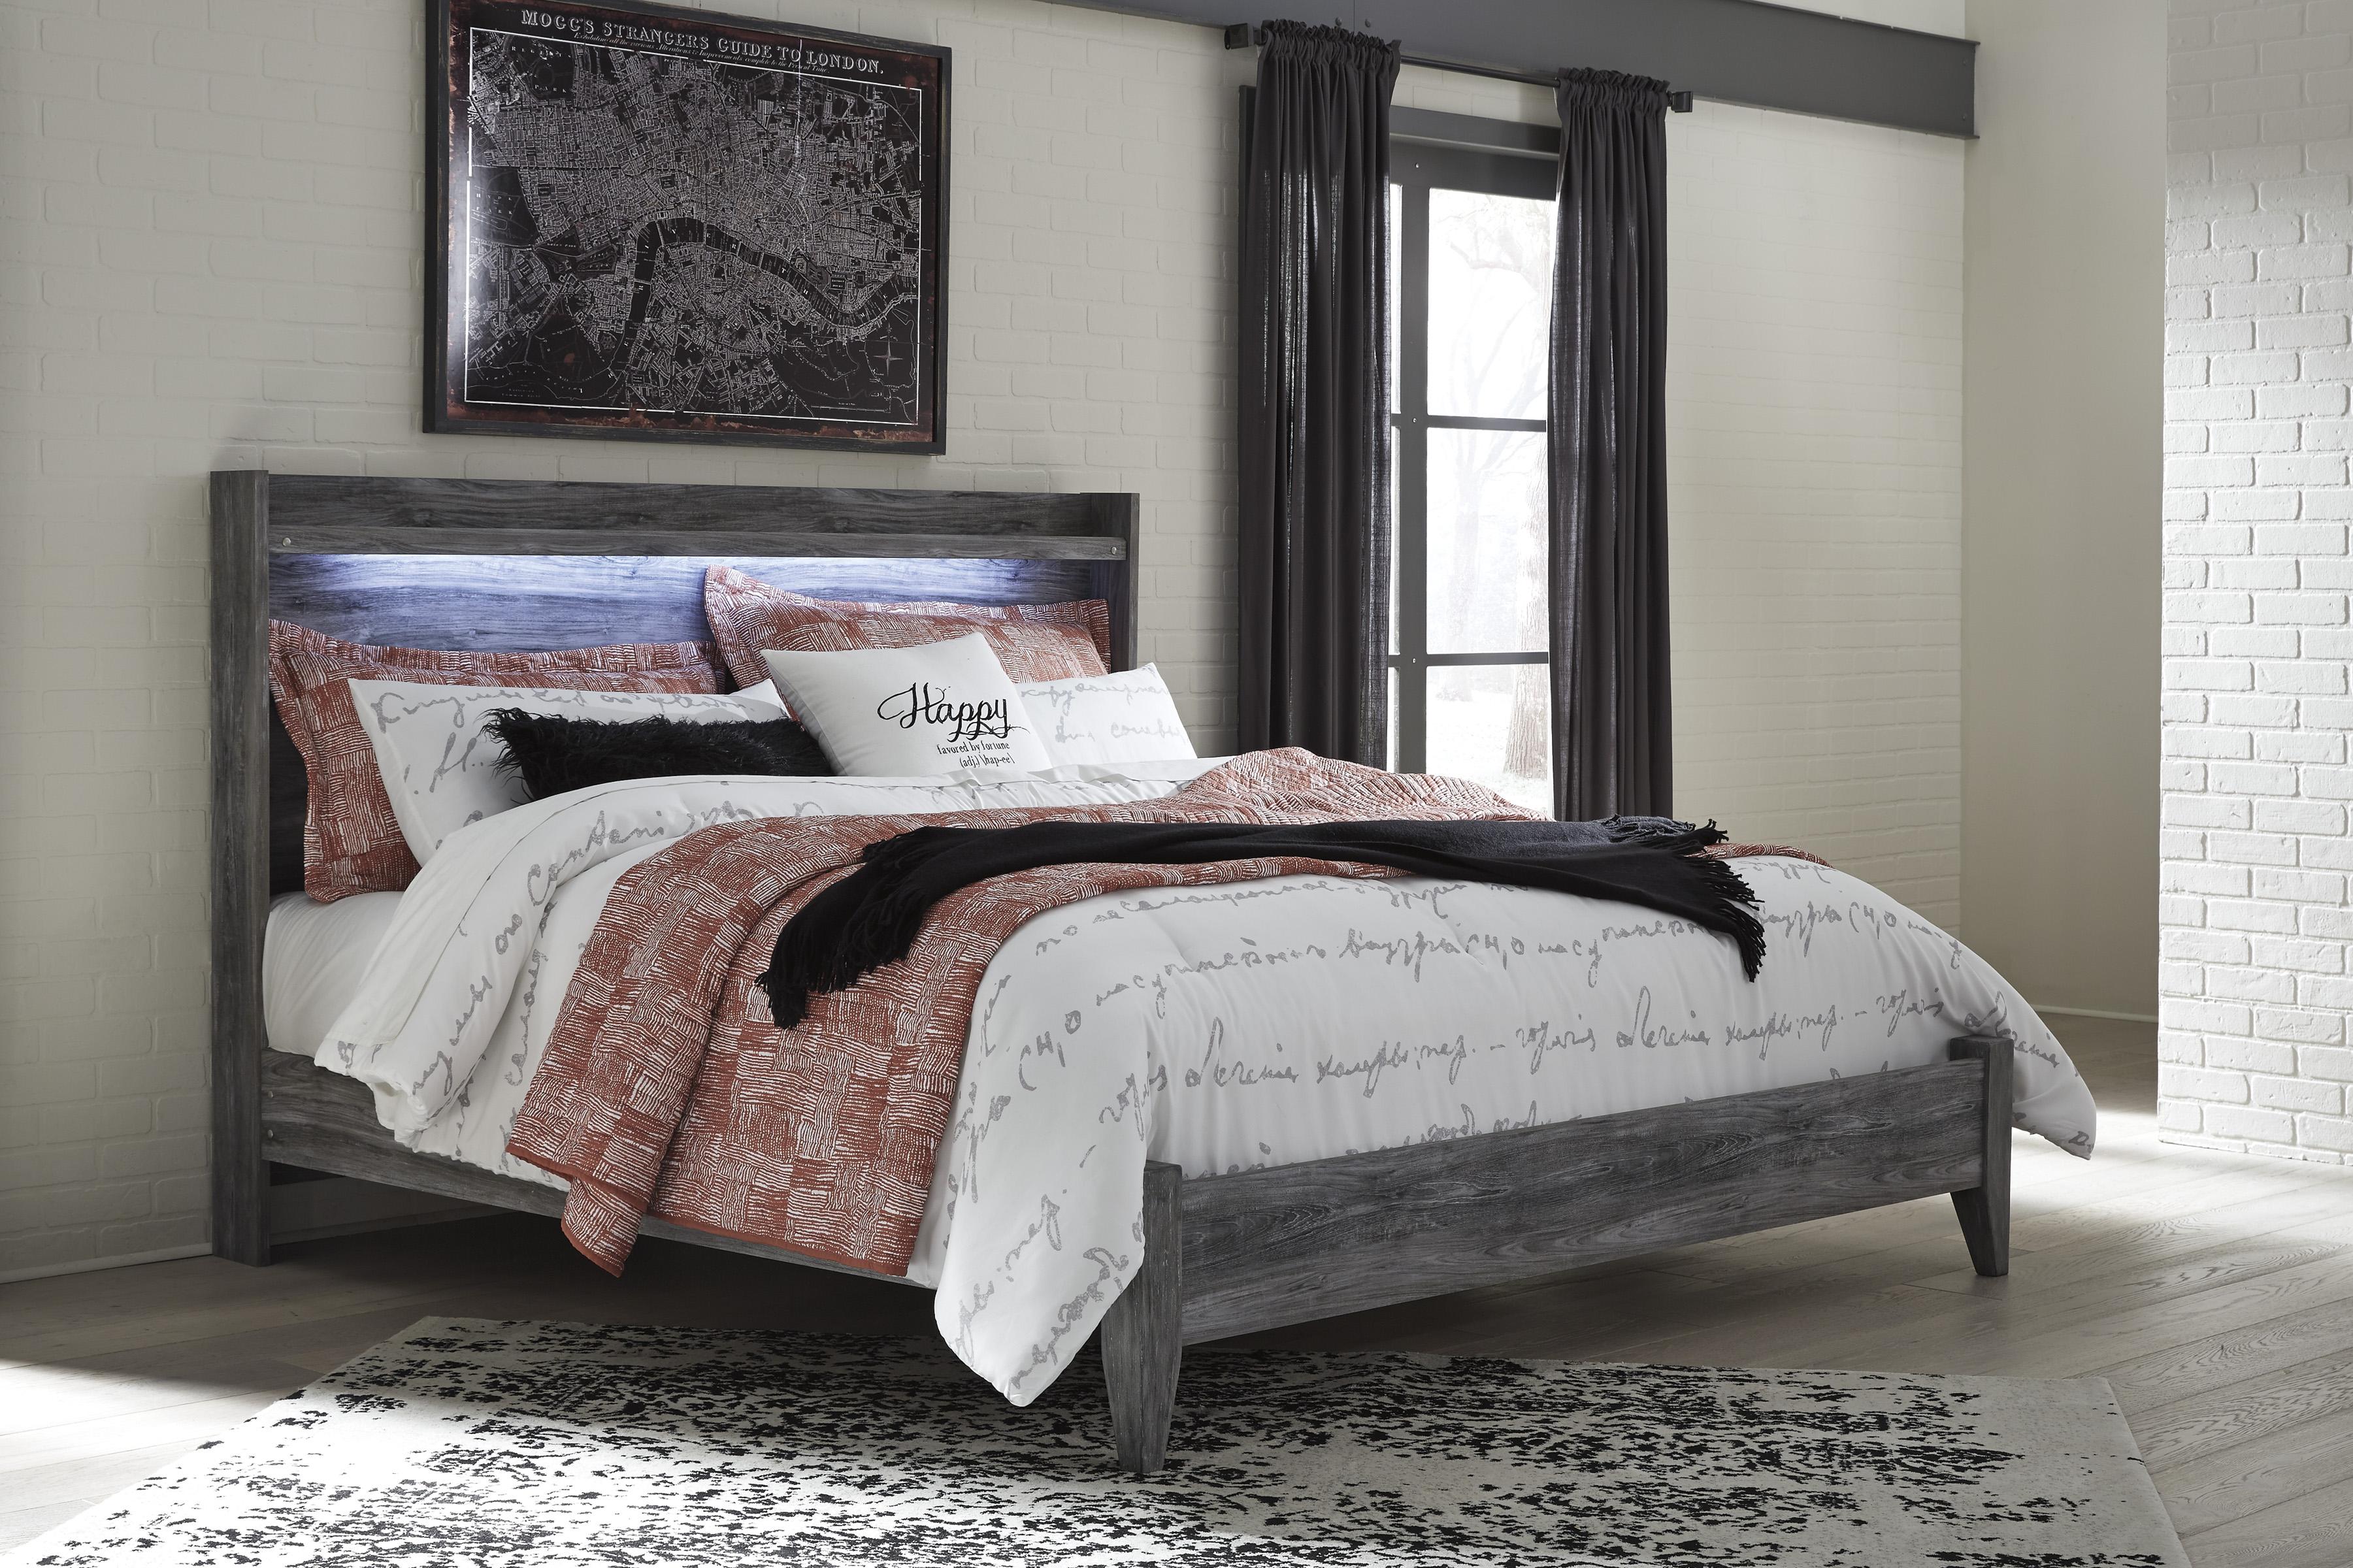 

    
Ashley Baystorm B221 King Size Panel Bedroom Set 6pcs in Gray
